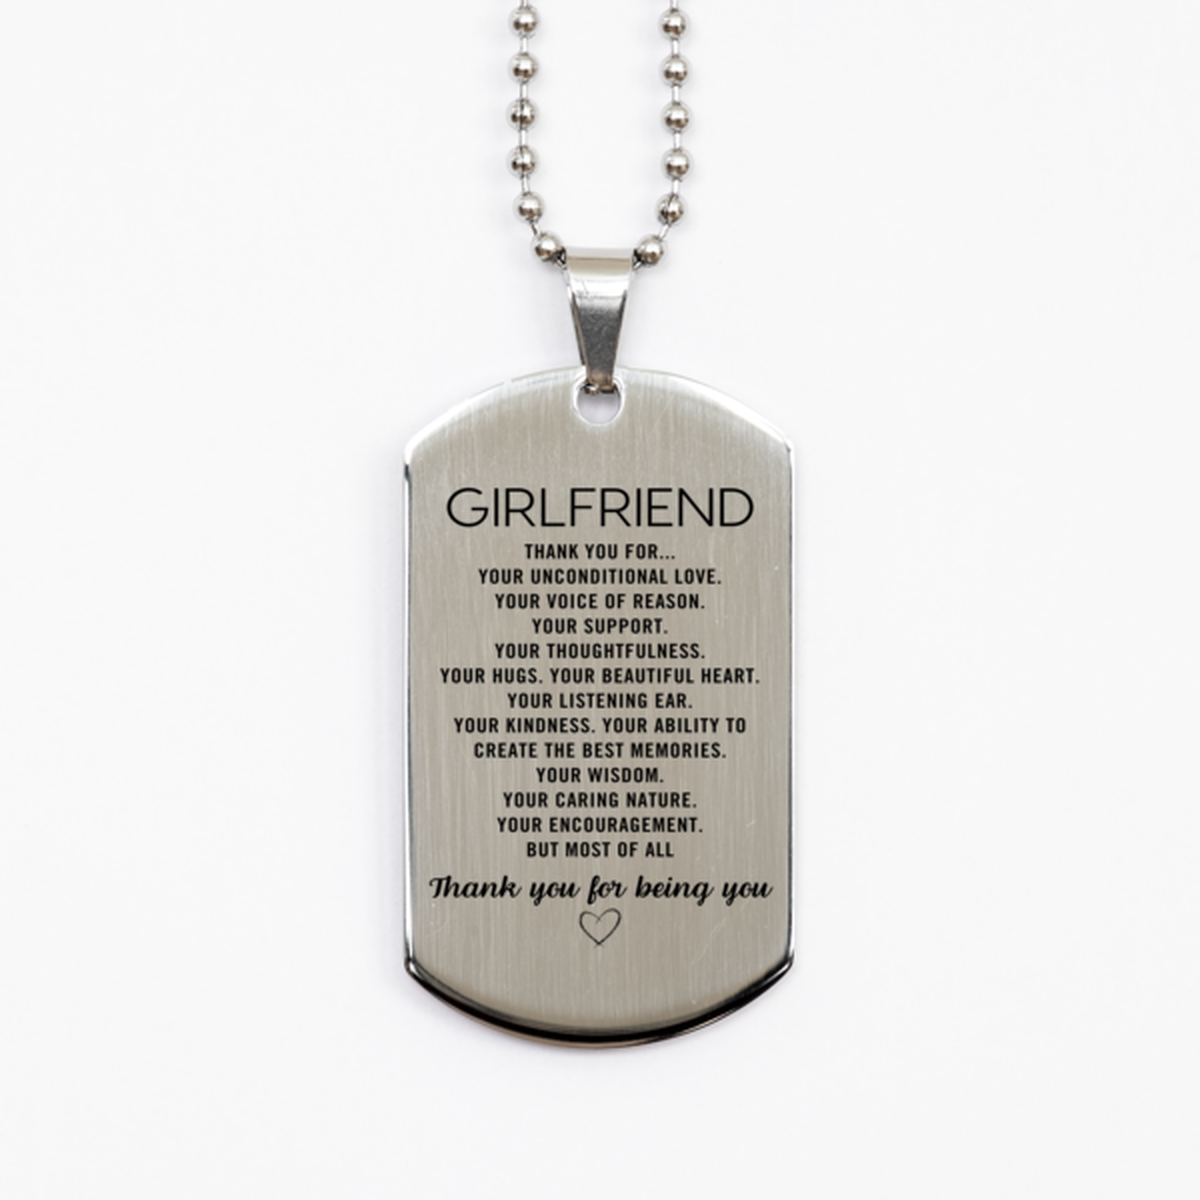 Girlfriend Silver Dog Tag Custom, Engraved Gifts For Girlfriend Christmas Graduation Birthday Gifts for Men Women Girlfriend Thank you for Your unconditional love